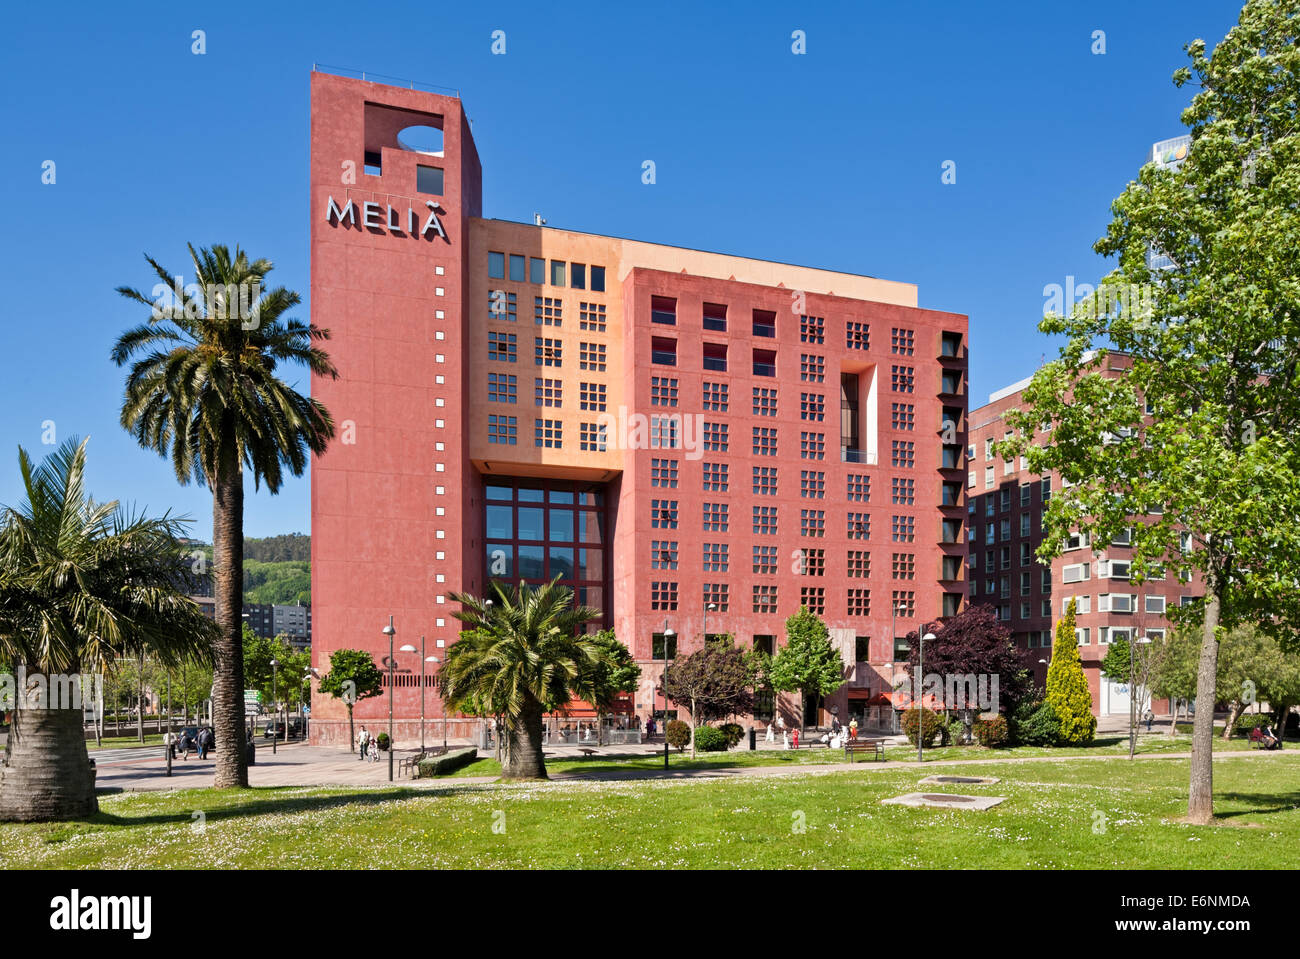 Melia Hotel in Bilbao, Spain Stock Photo